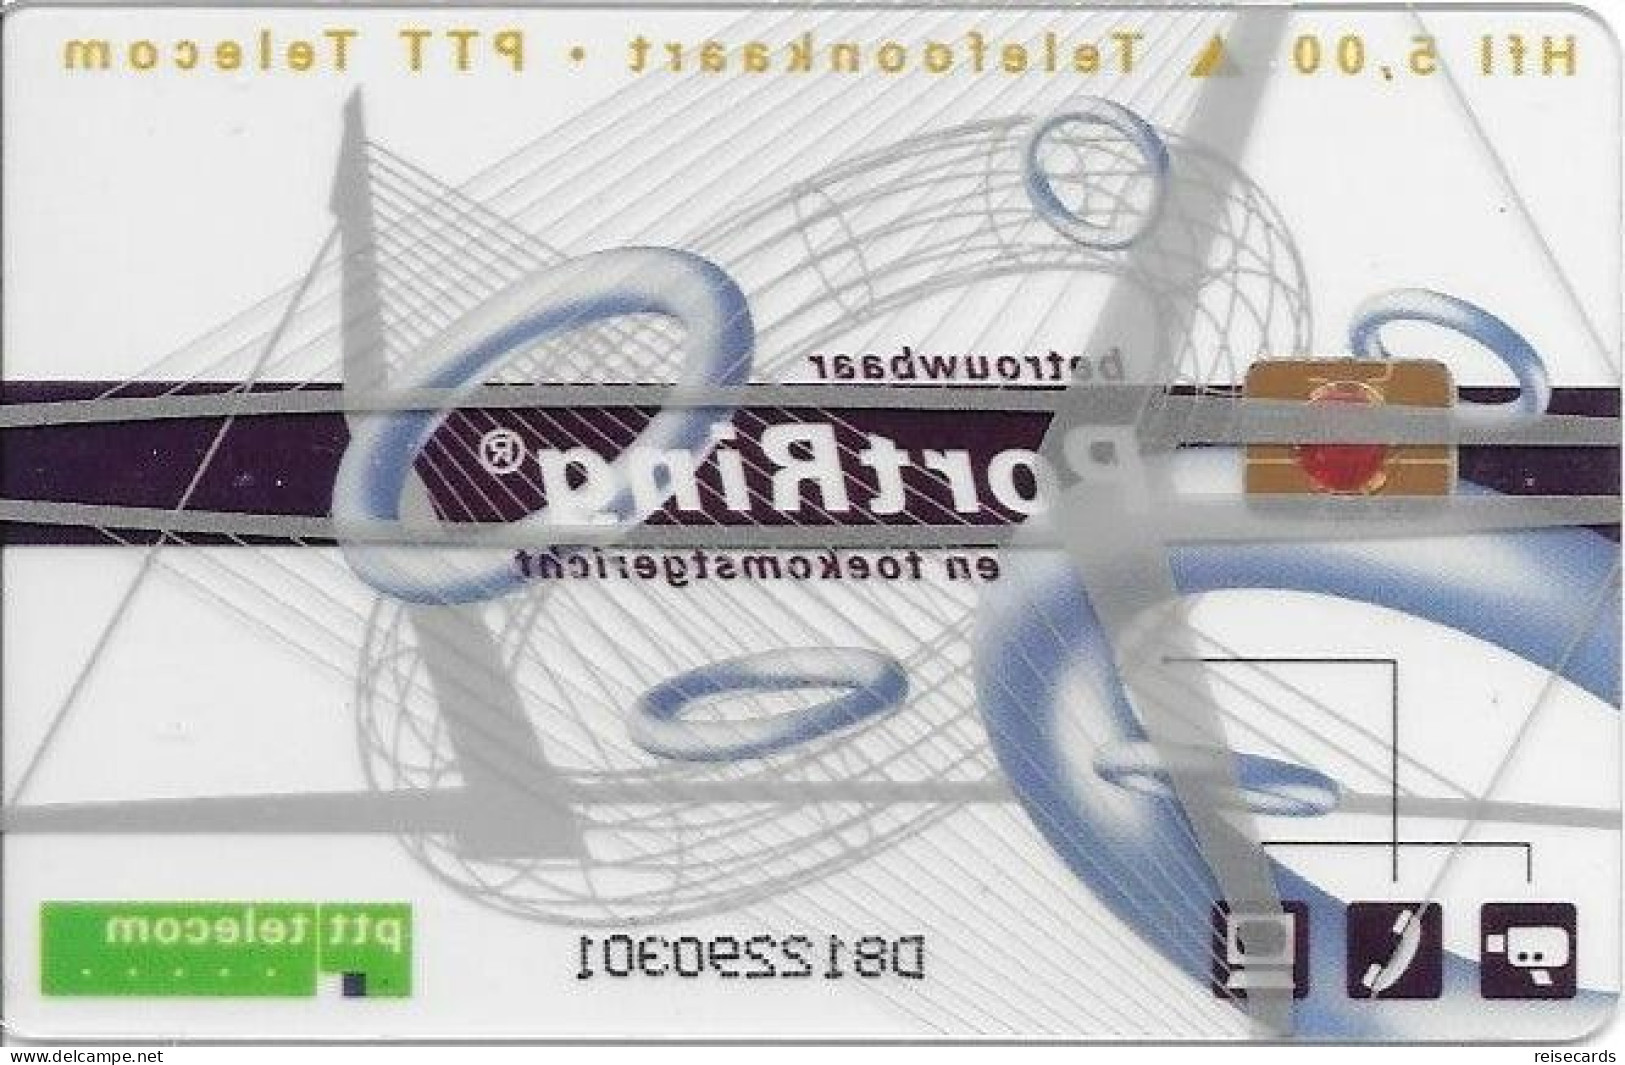 Netherlands: Ptt Telecom - 1997 PortRing. Mint, Transparent - Public